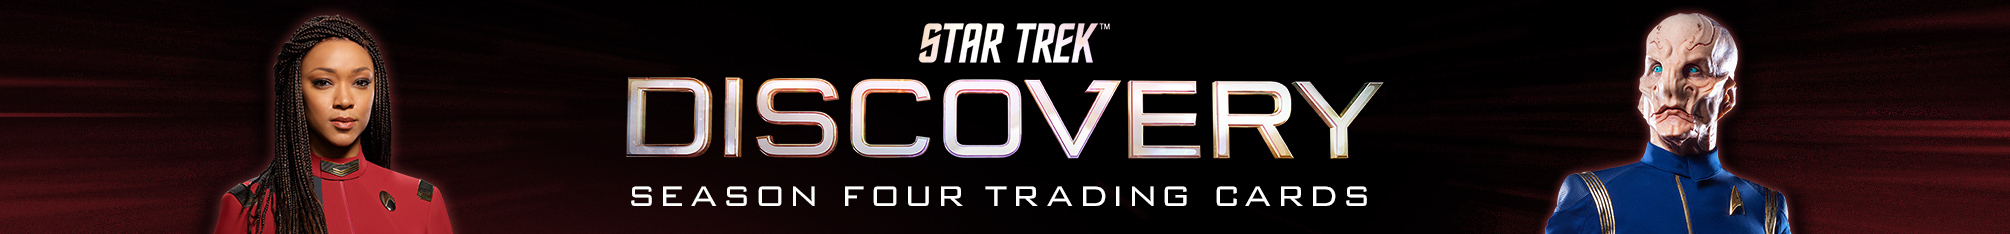 Star Trek Discovery Season 4 Trading Cards